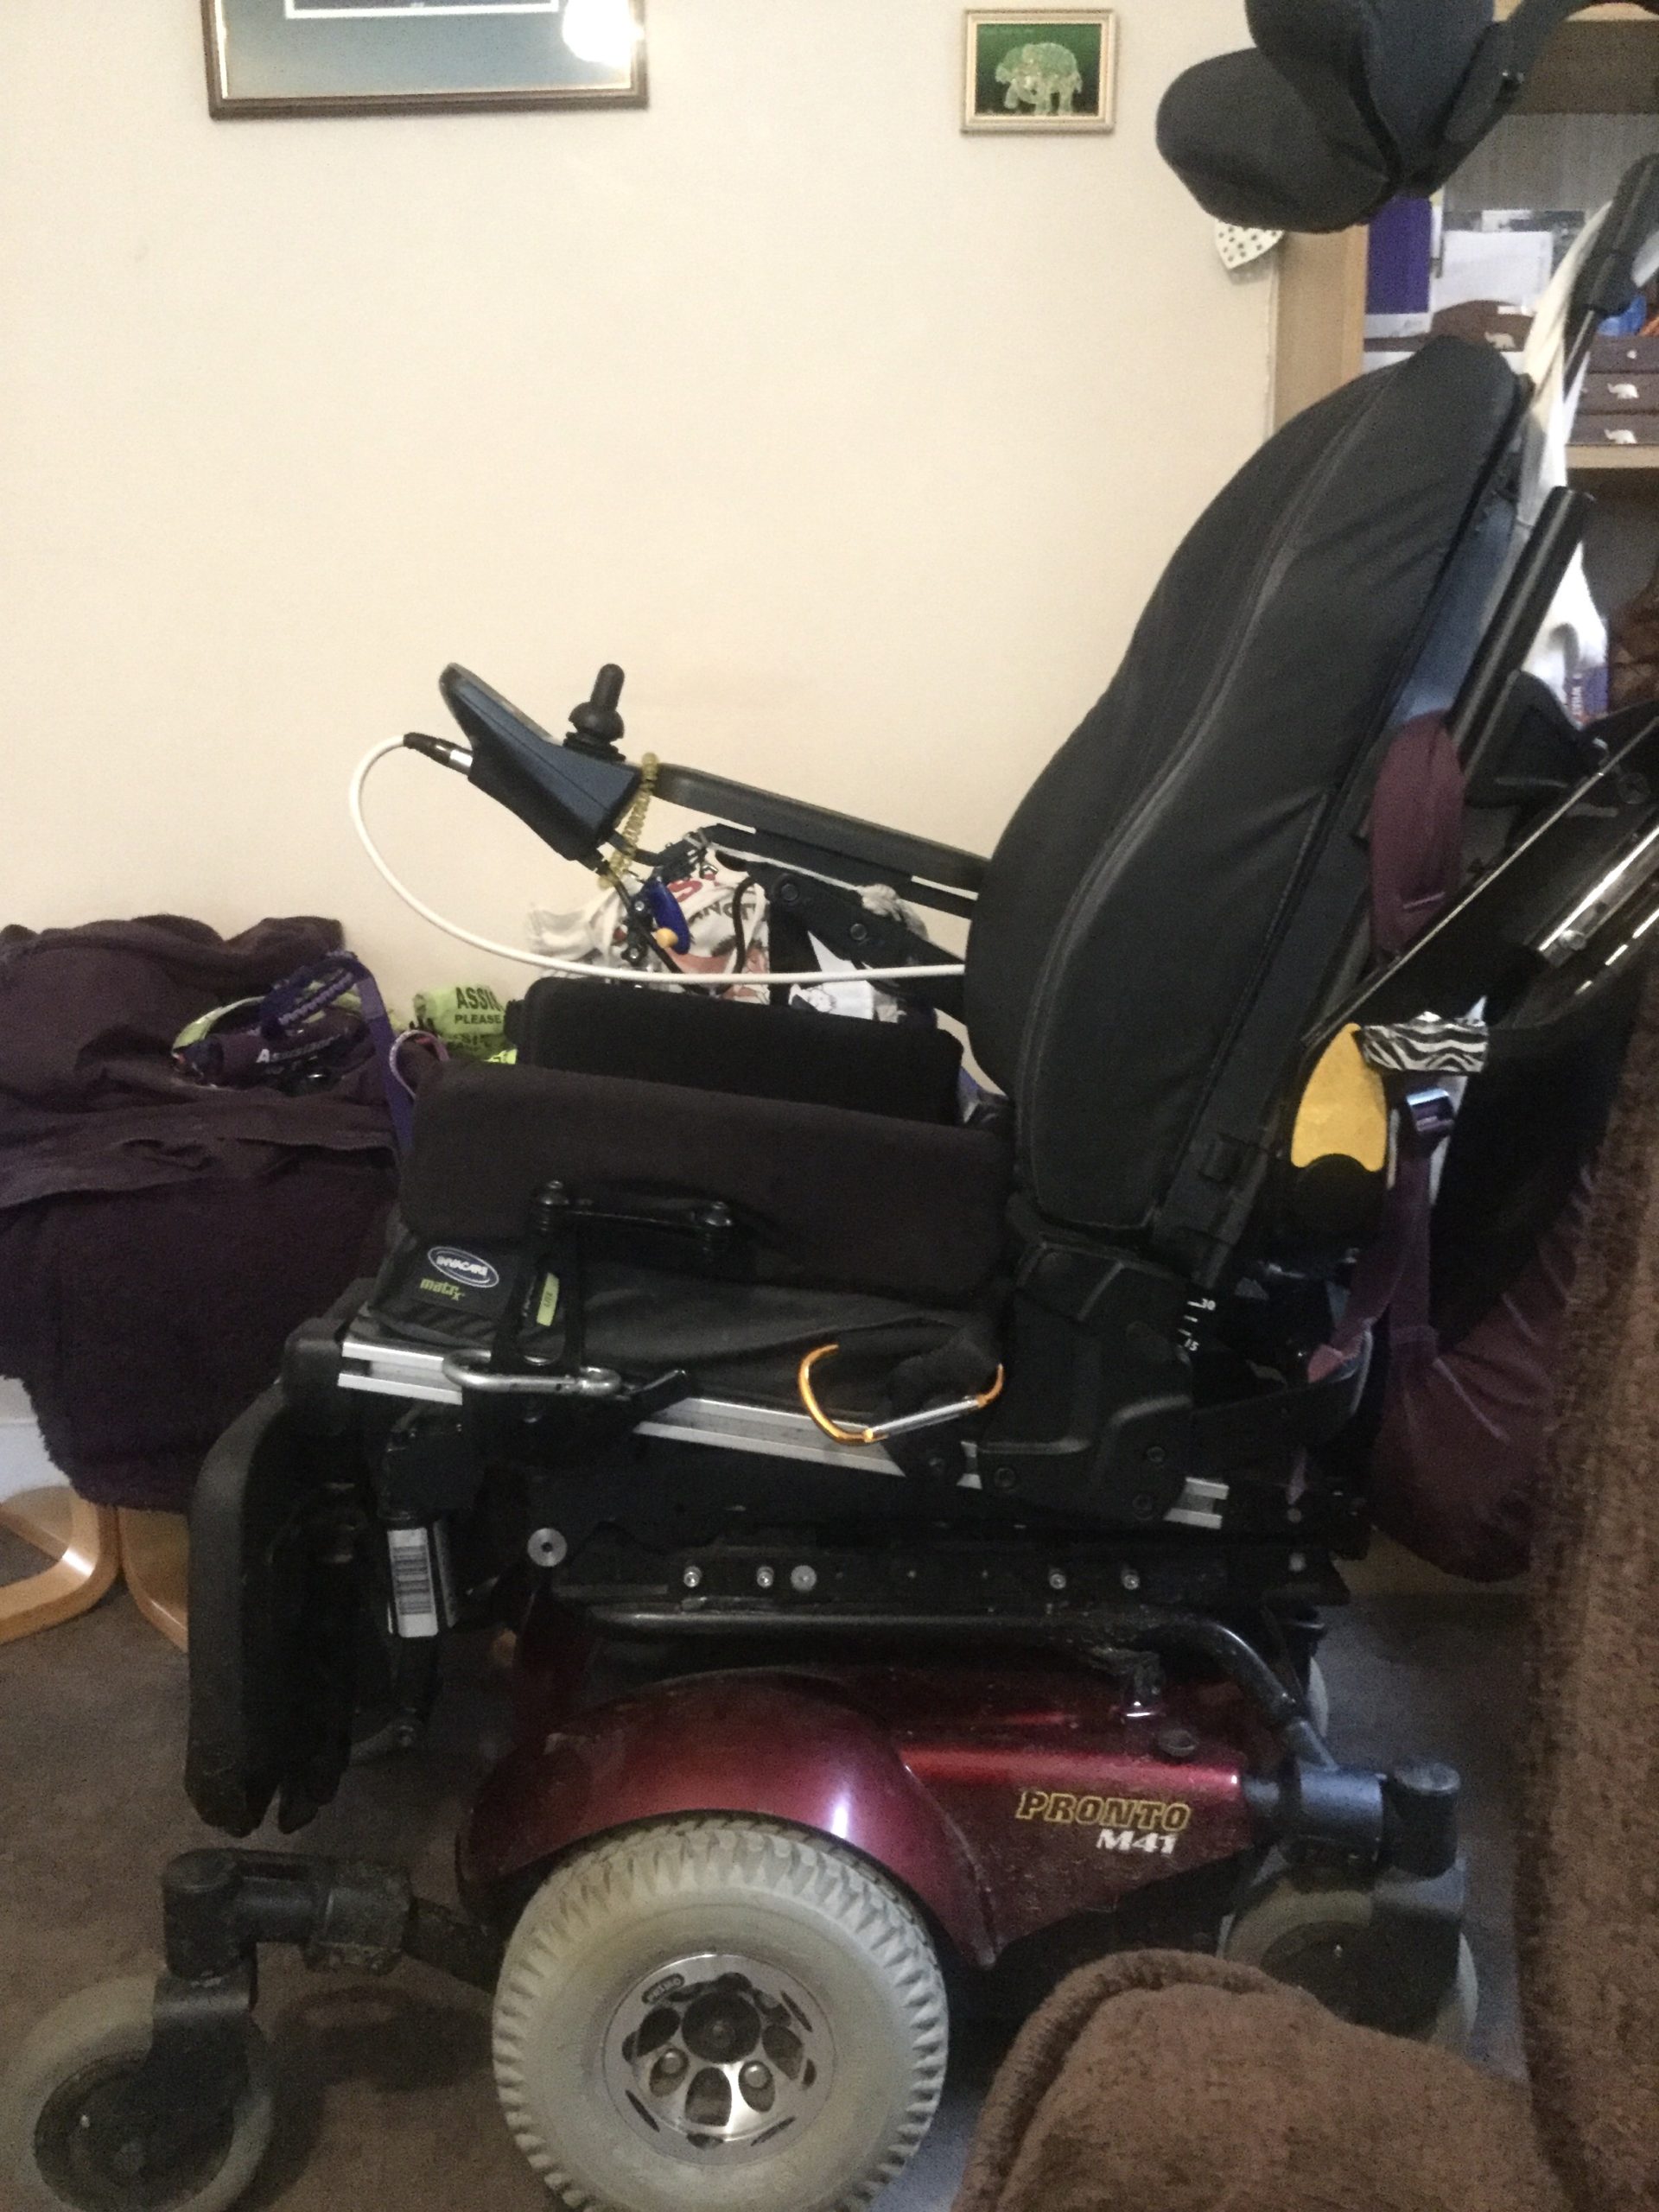 Invacare Pronto M41 – Powered Wheelchair